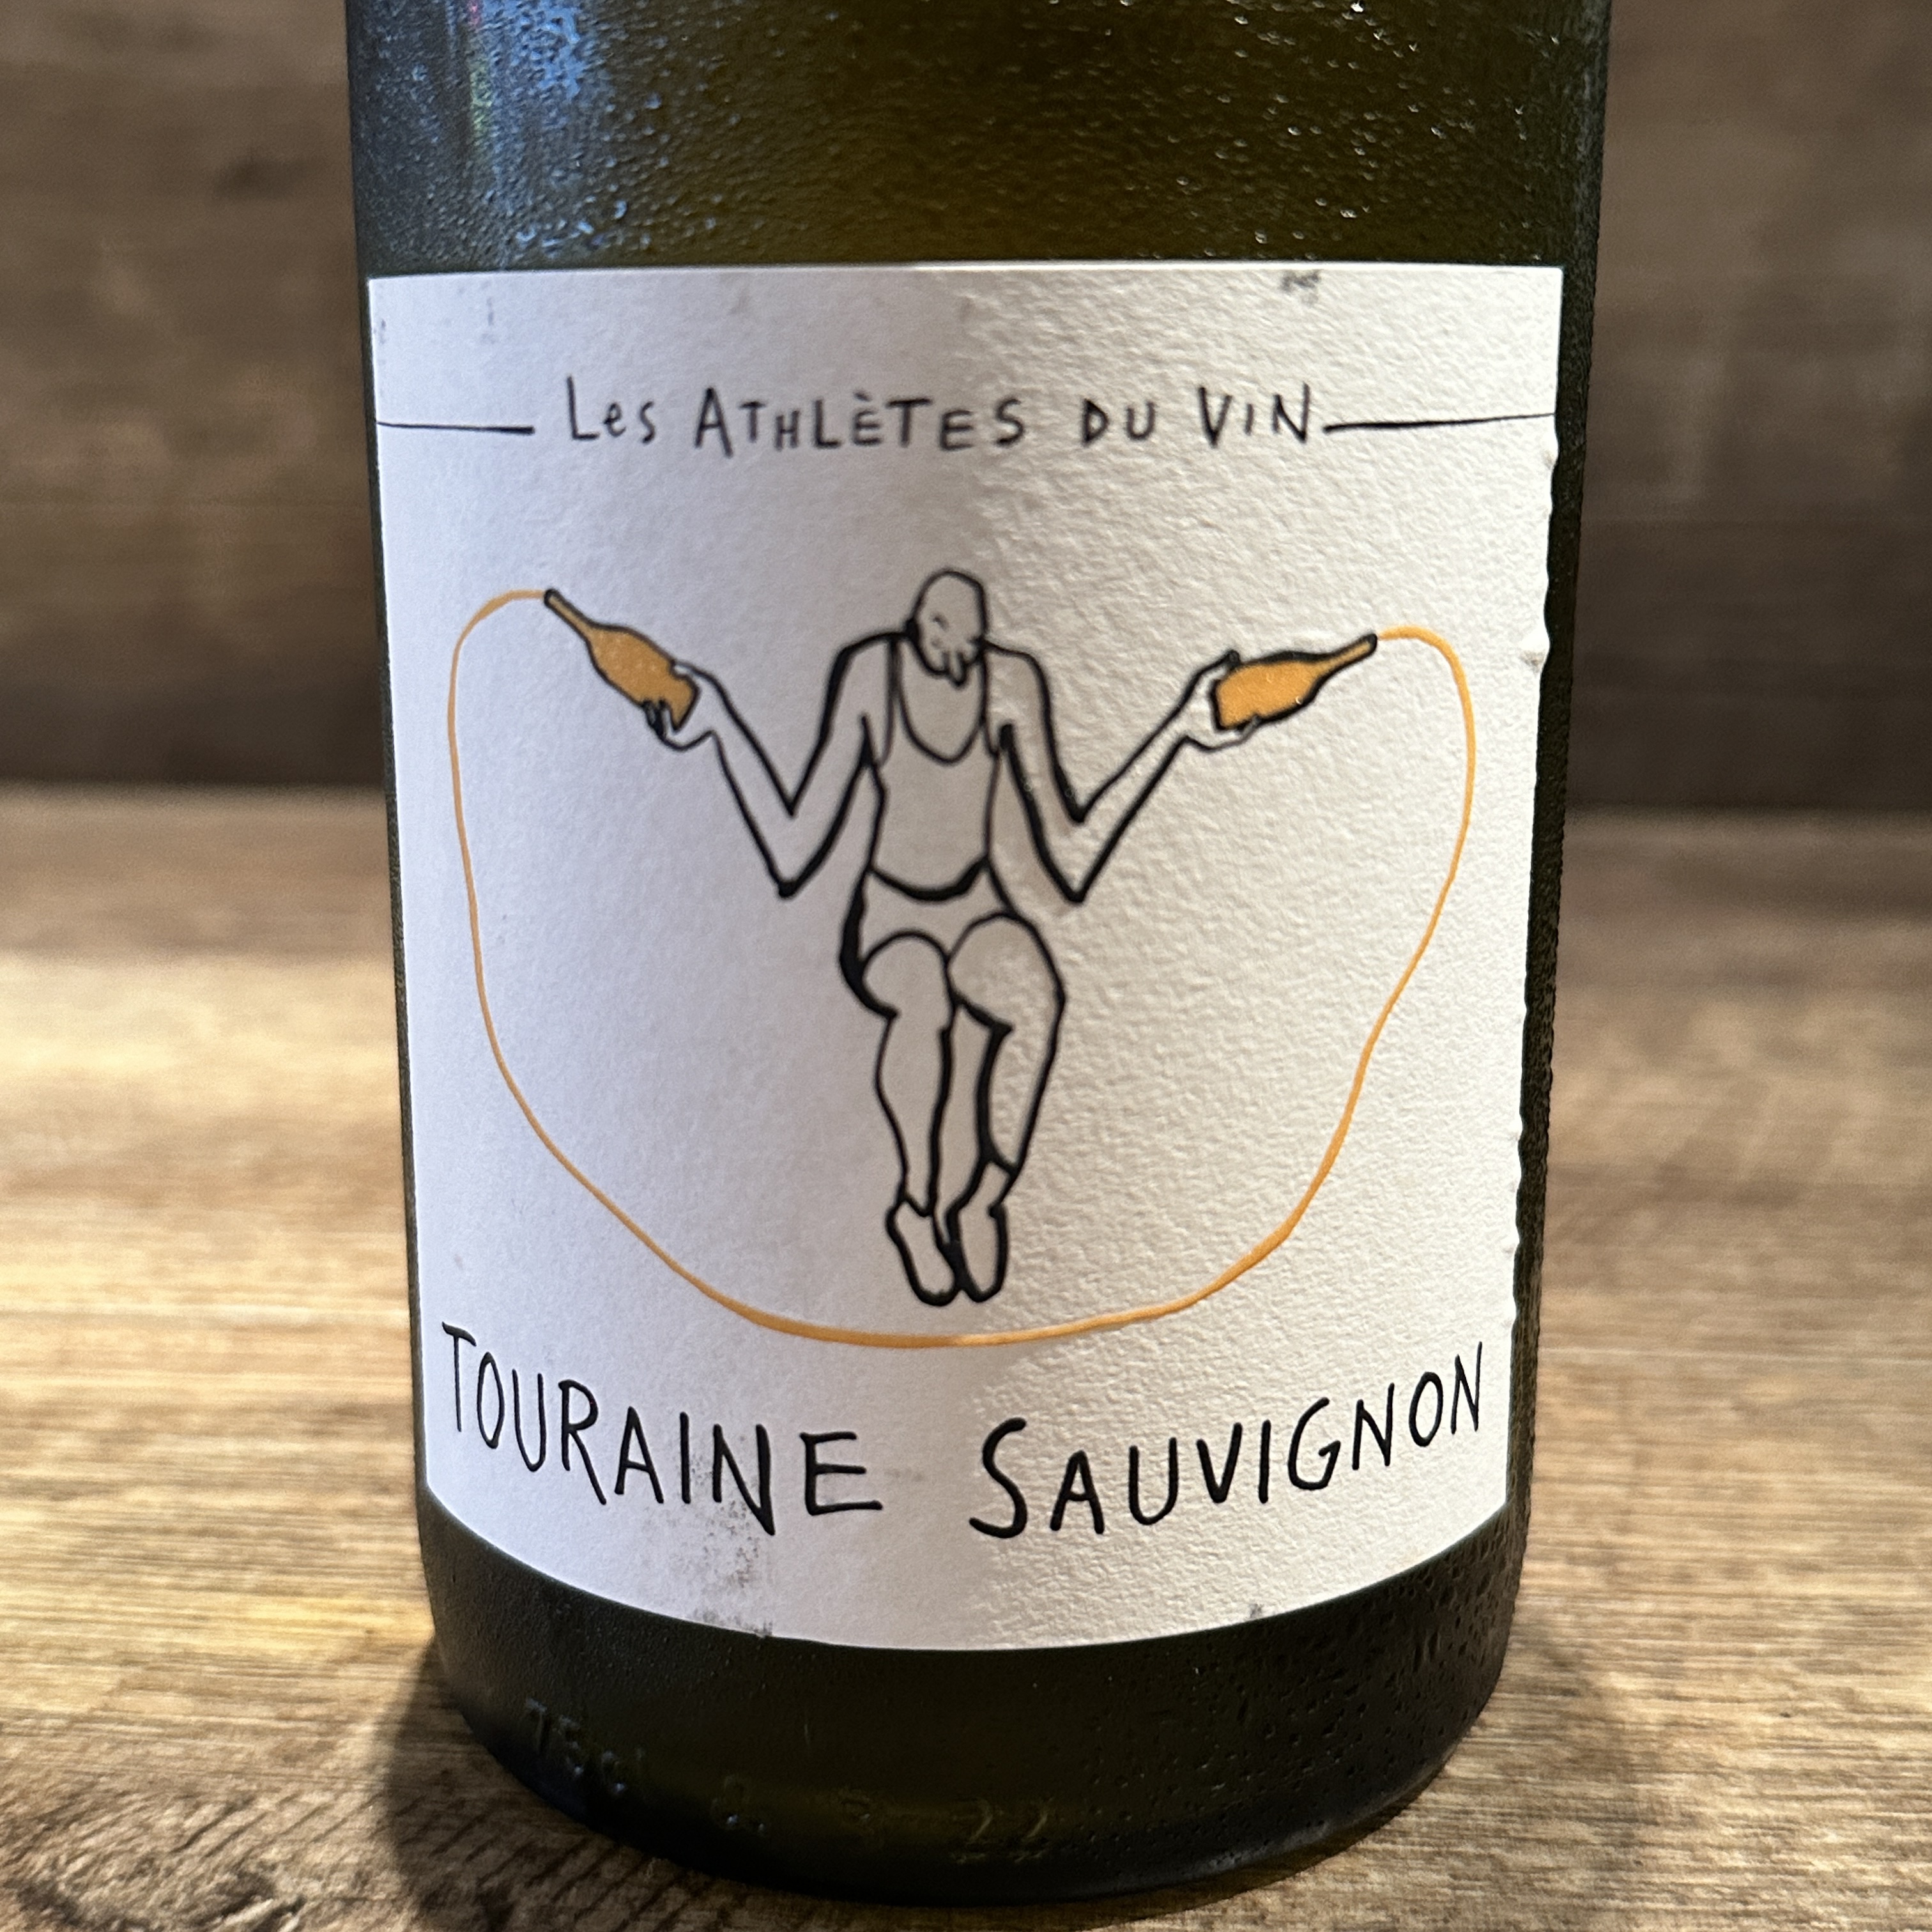 Les Athletes Du Vin Touraine Sauvignon 2022　レ･ザスレット･デュ･ヴァン トゥーレーヌ･ソーヴィニヨン